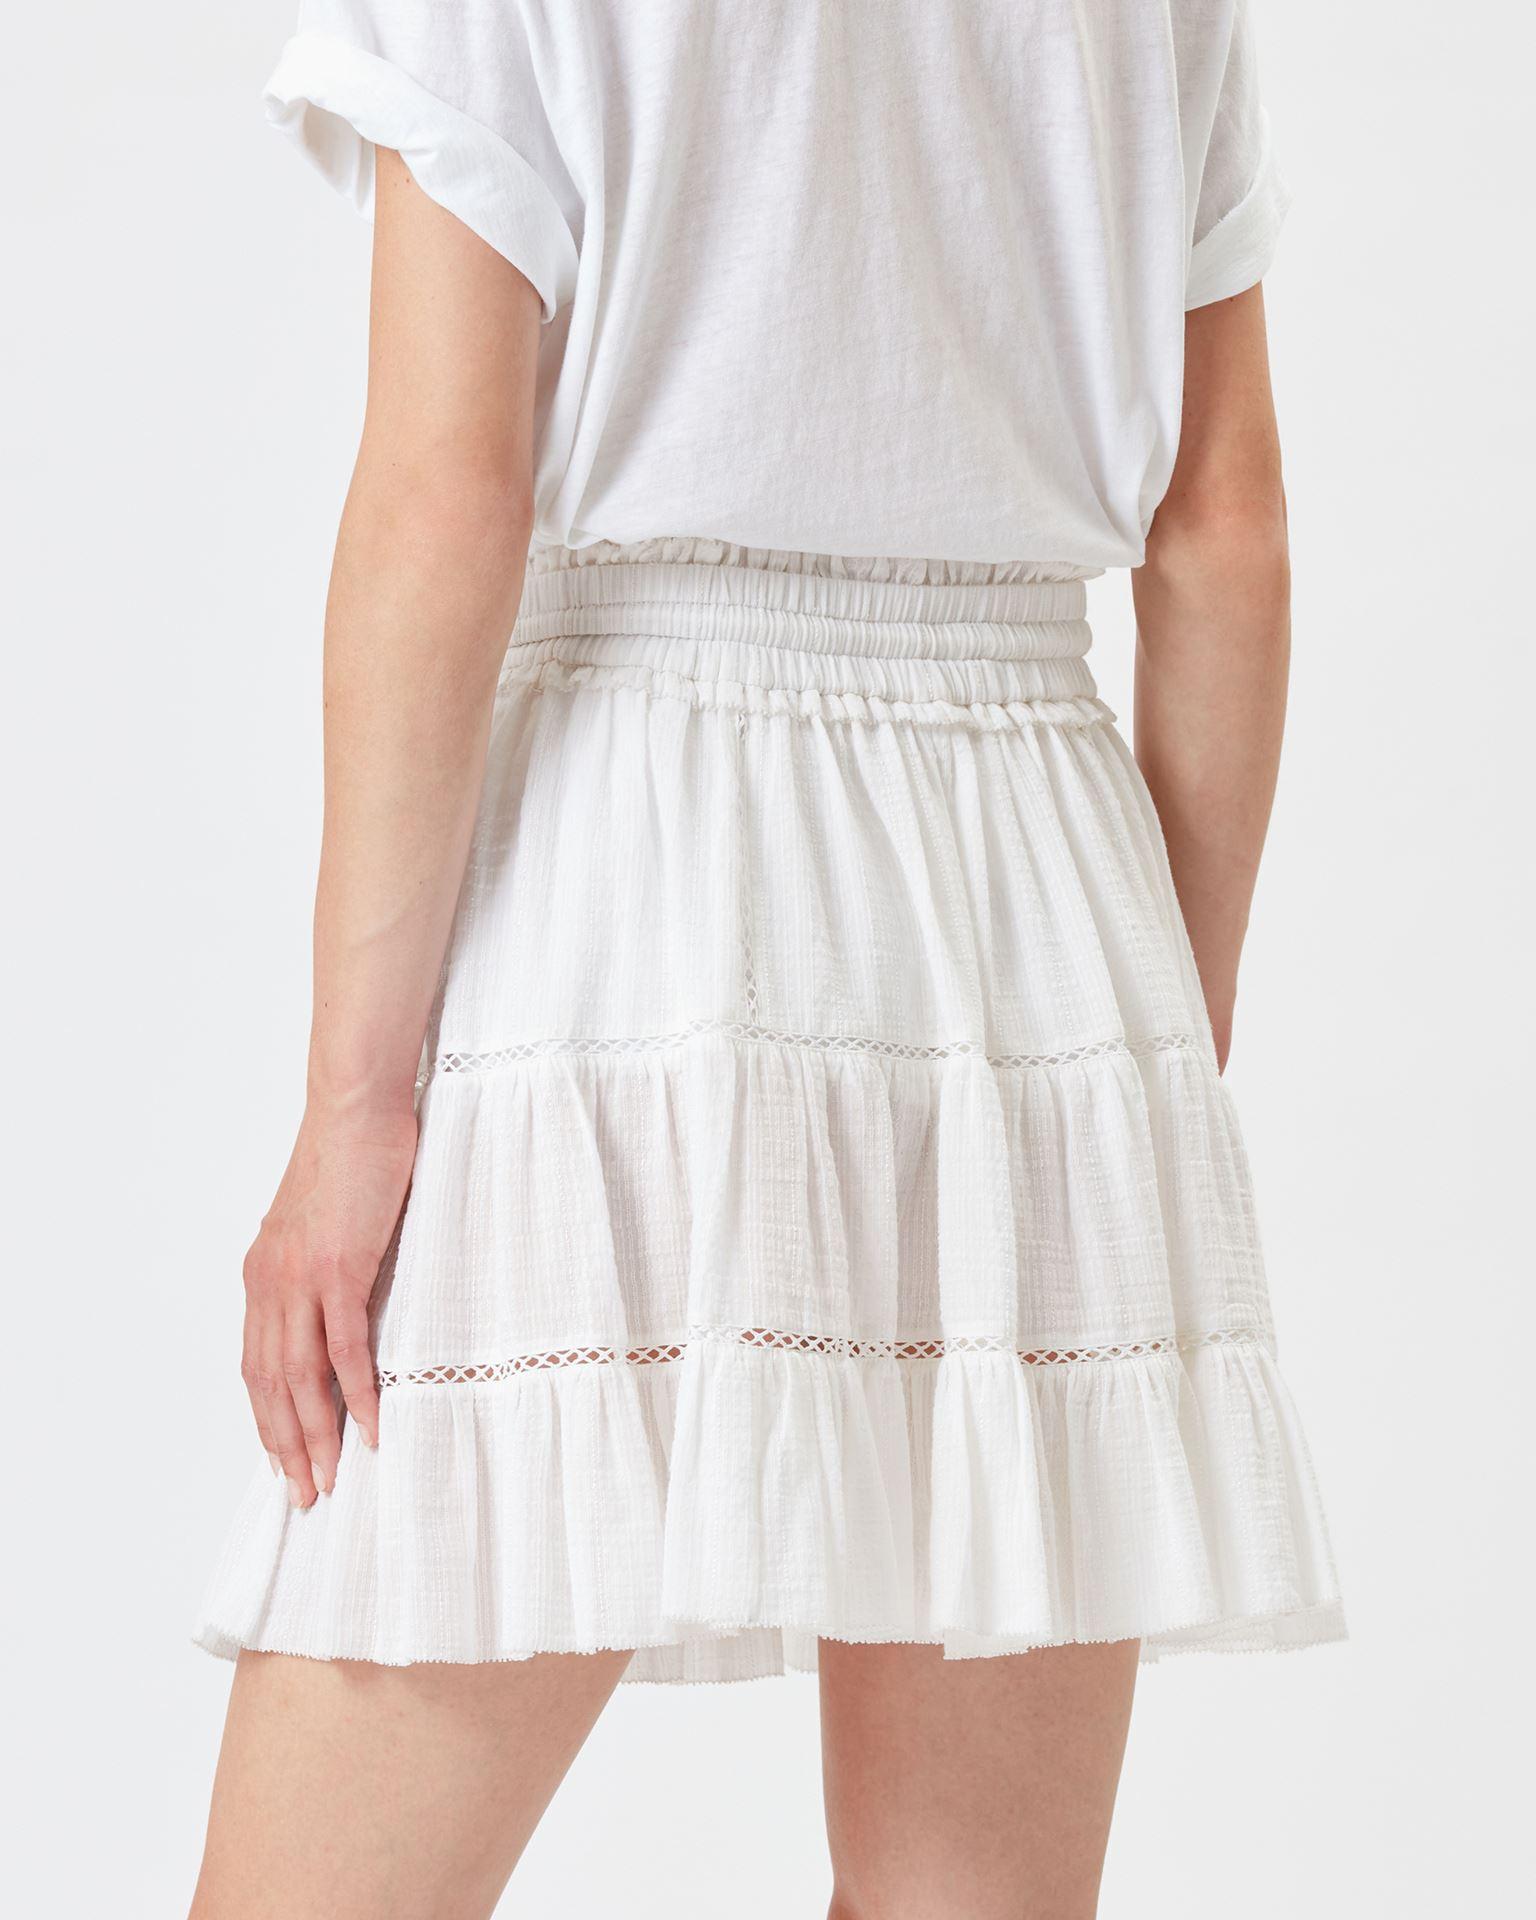 Étoile Marant Lioline Cotton And Linen Skirt in White